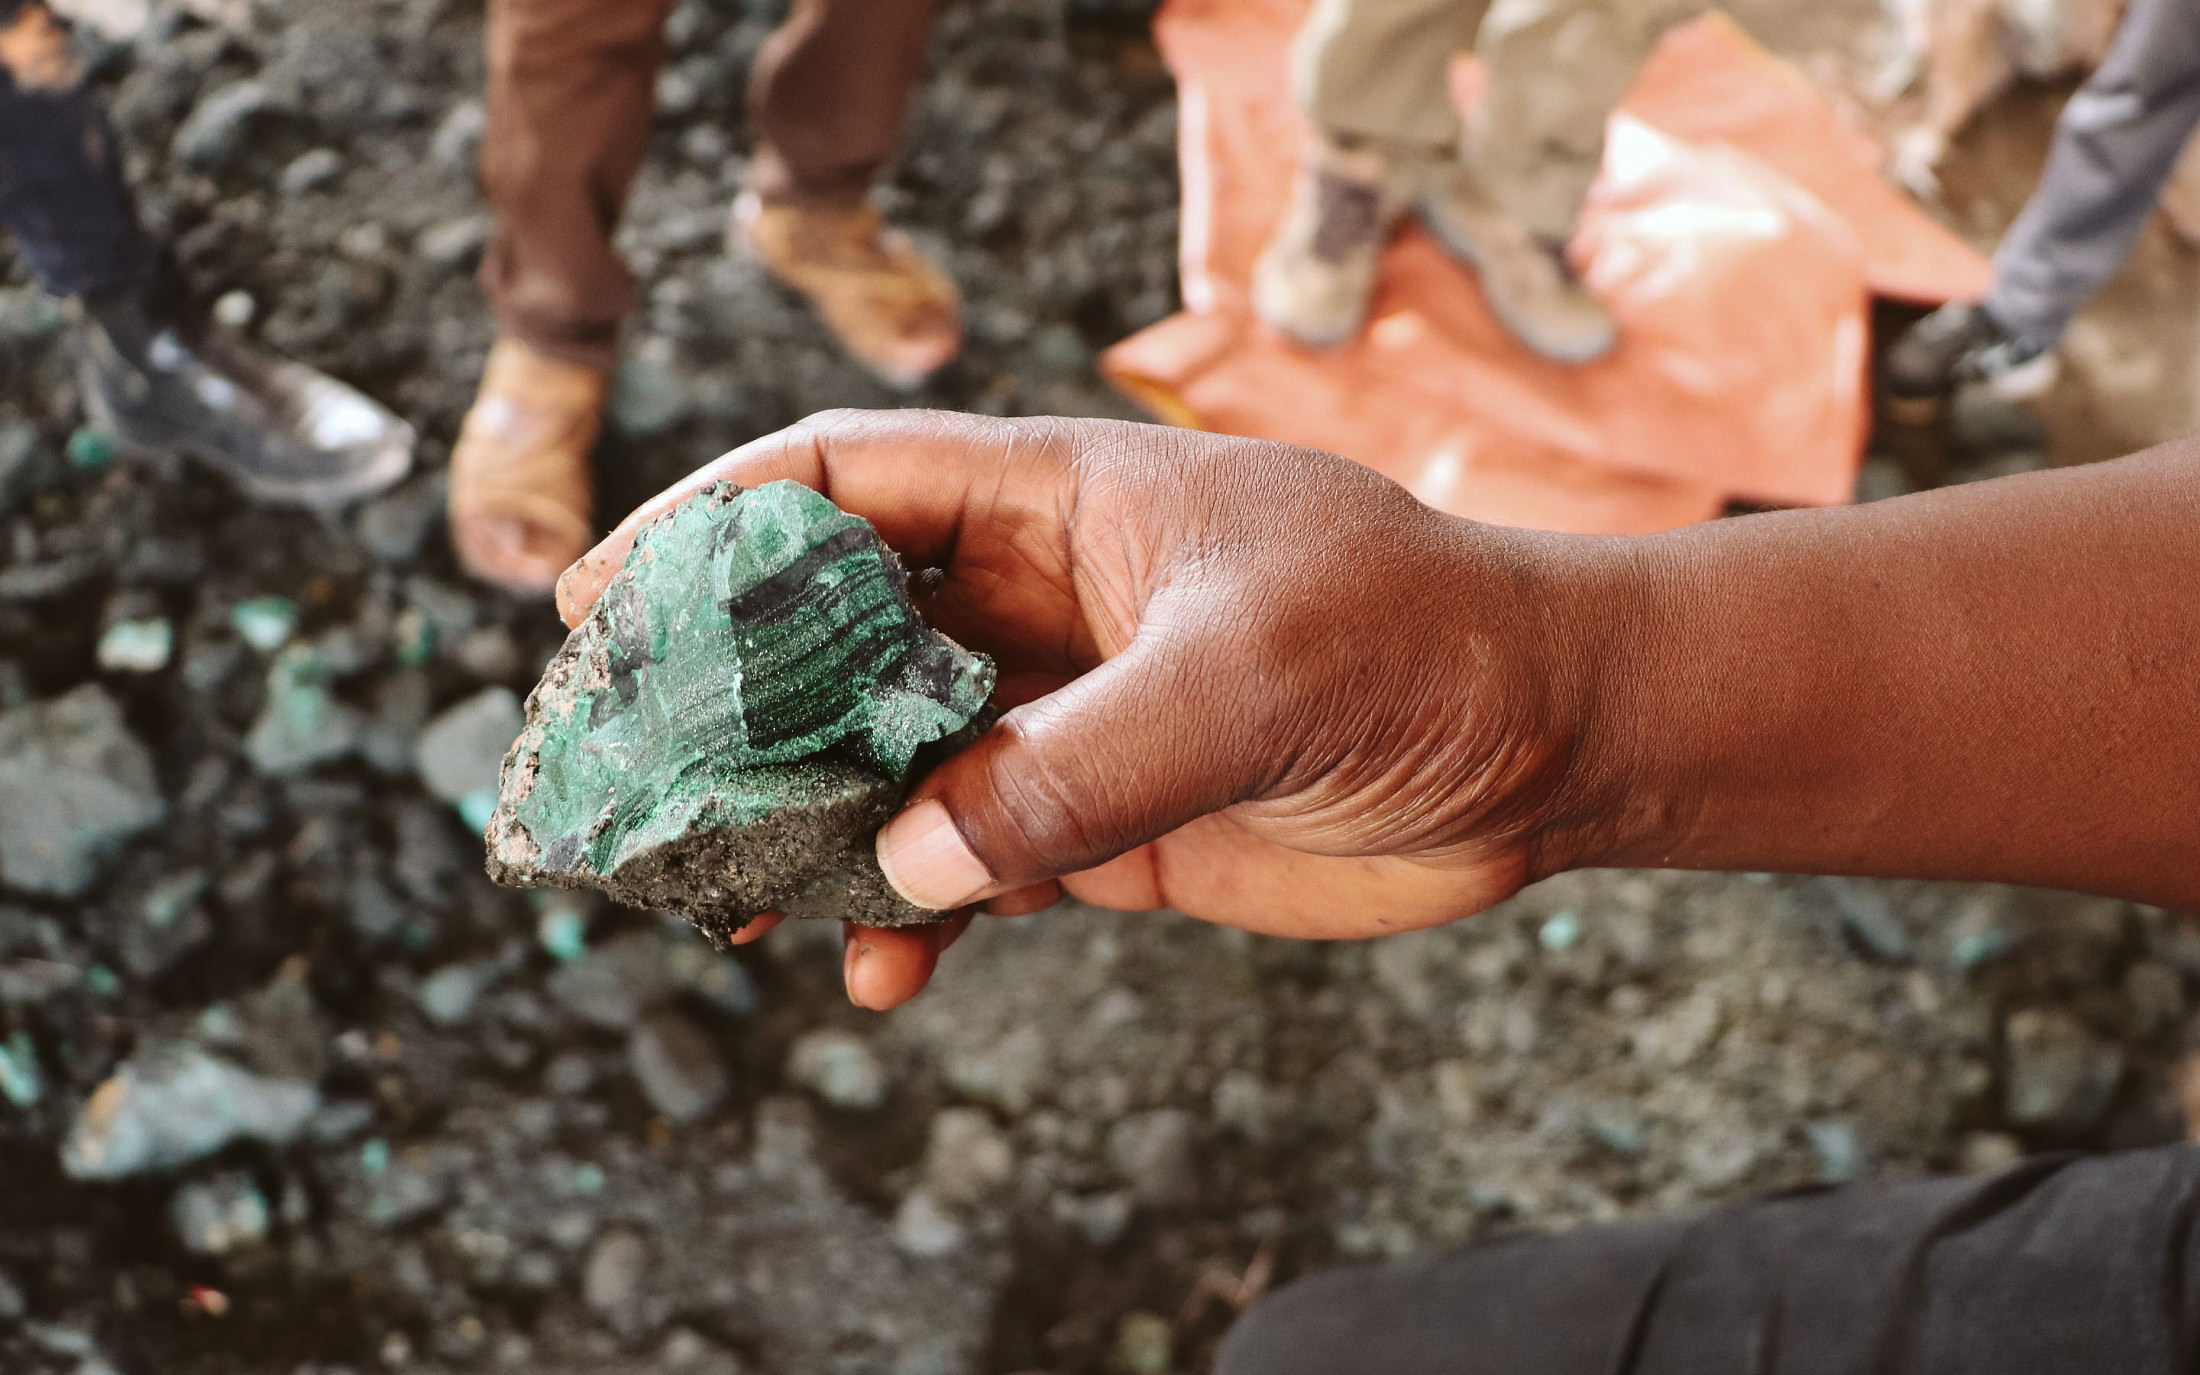 Akku-Produktion: Kaum Fortschritte beim Kampf gegen Kinderarbeit beim Kobalt-Abbau  —